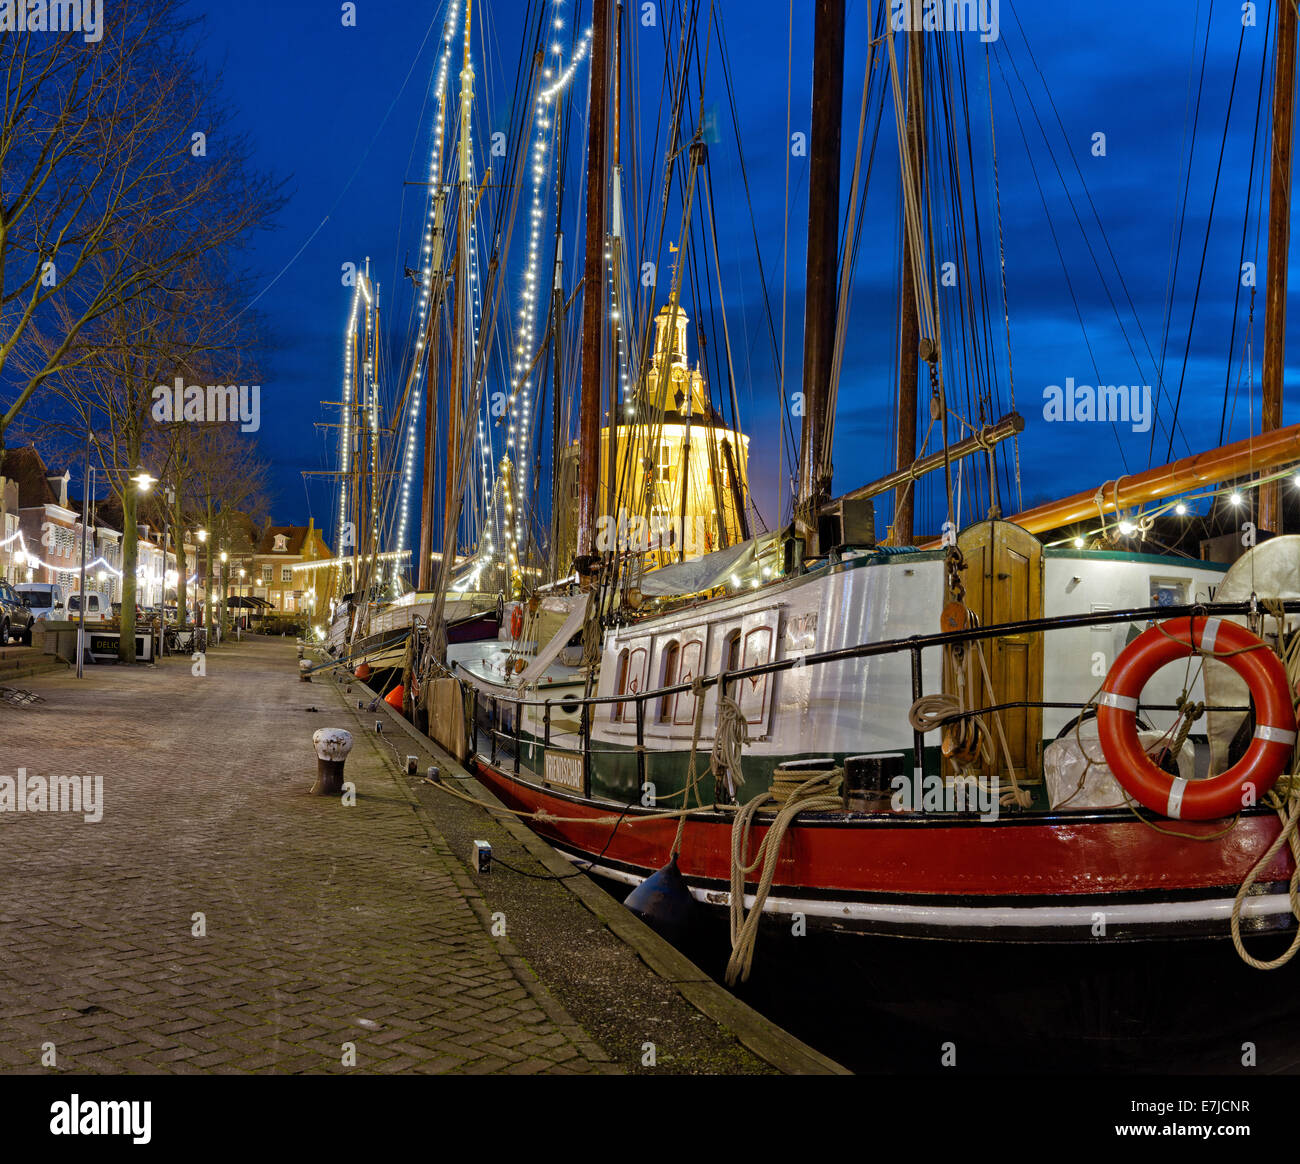 Holland, Europe, Koog aan de Zaan, Enkhuizen, Noord-Holland, Netherlands, city, village, winter, night, evening, ships, boat, fl Stock Photo